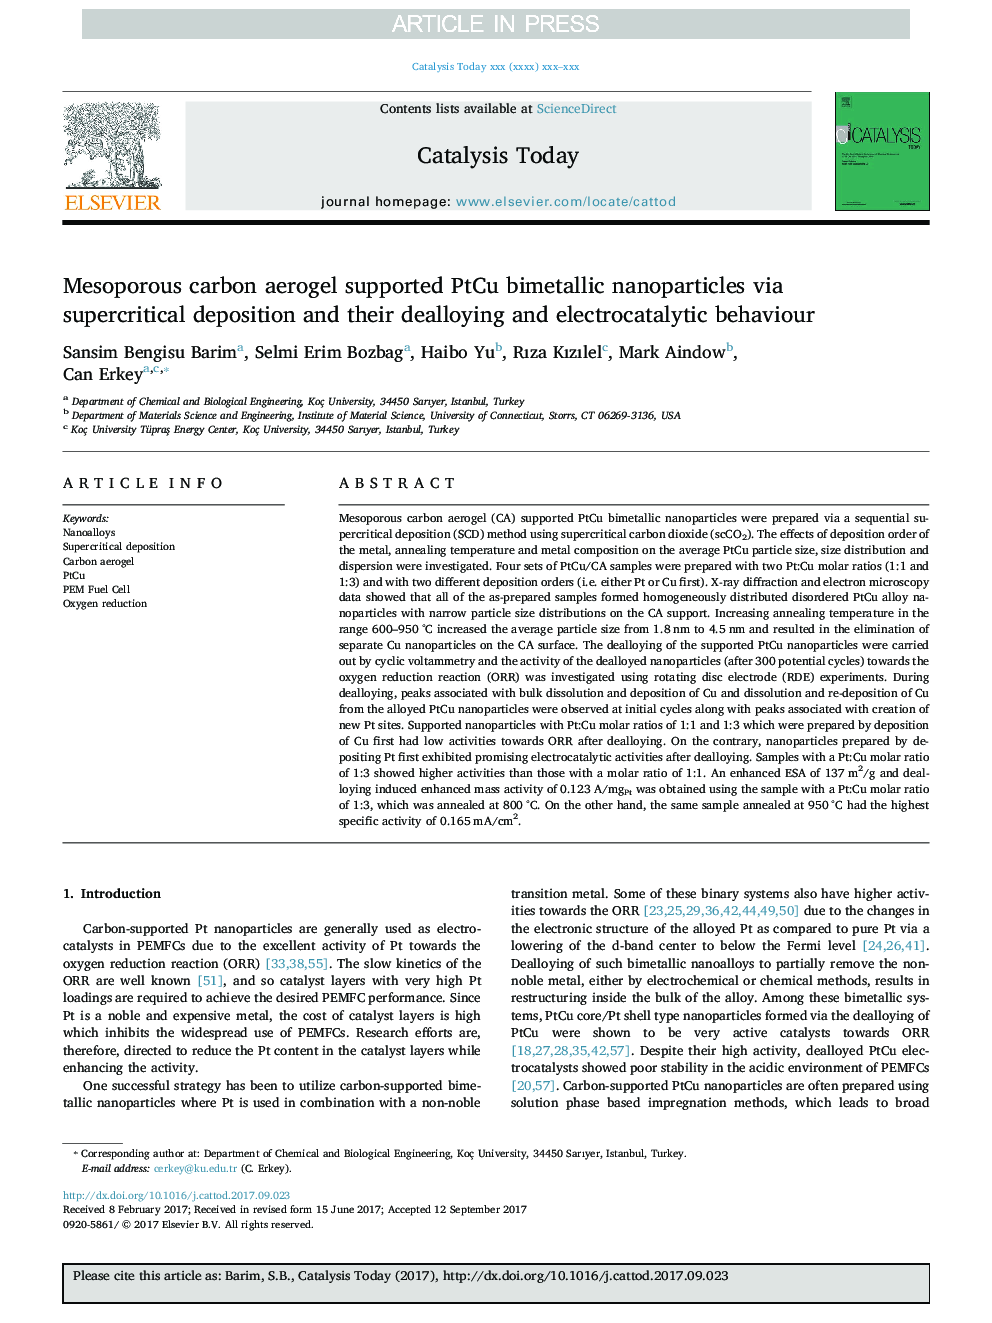 Mesoporous carbon aerogel supported PtCu bimetallic nanoparticles via supercritical deposition and their dealloying and electrocatalytic behaviour